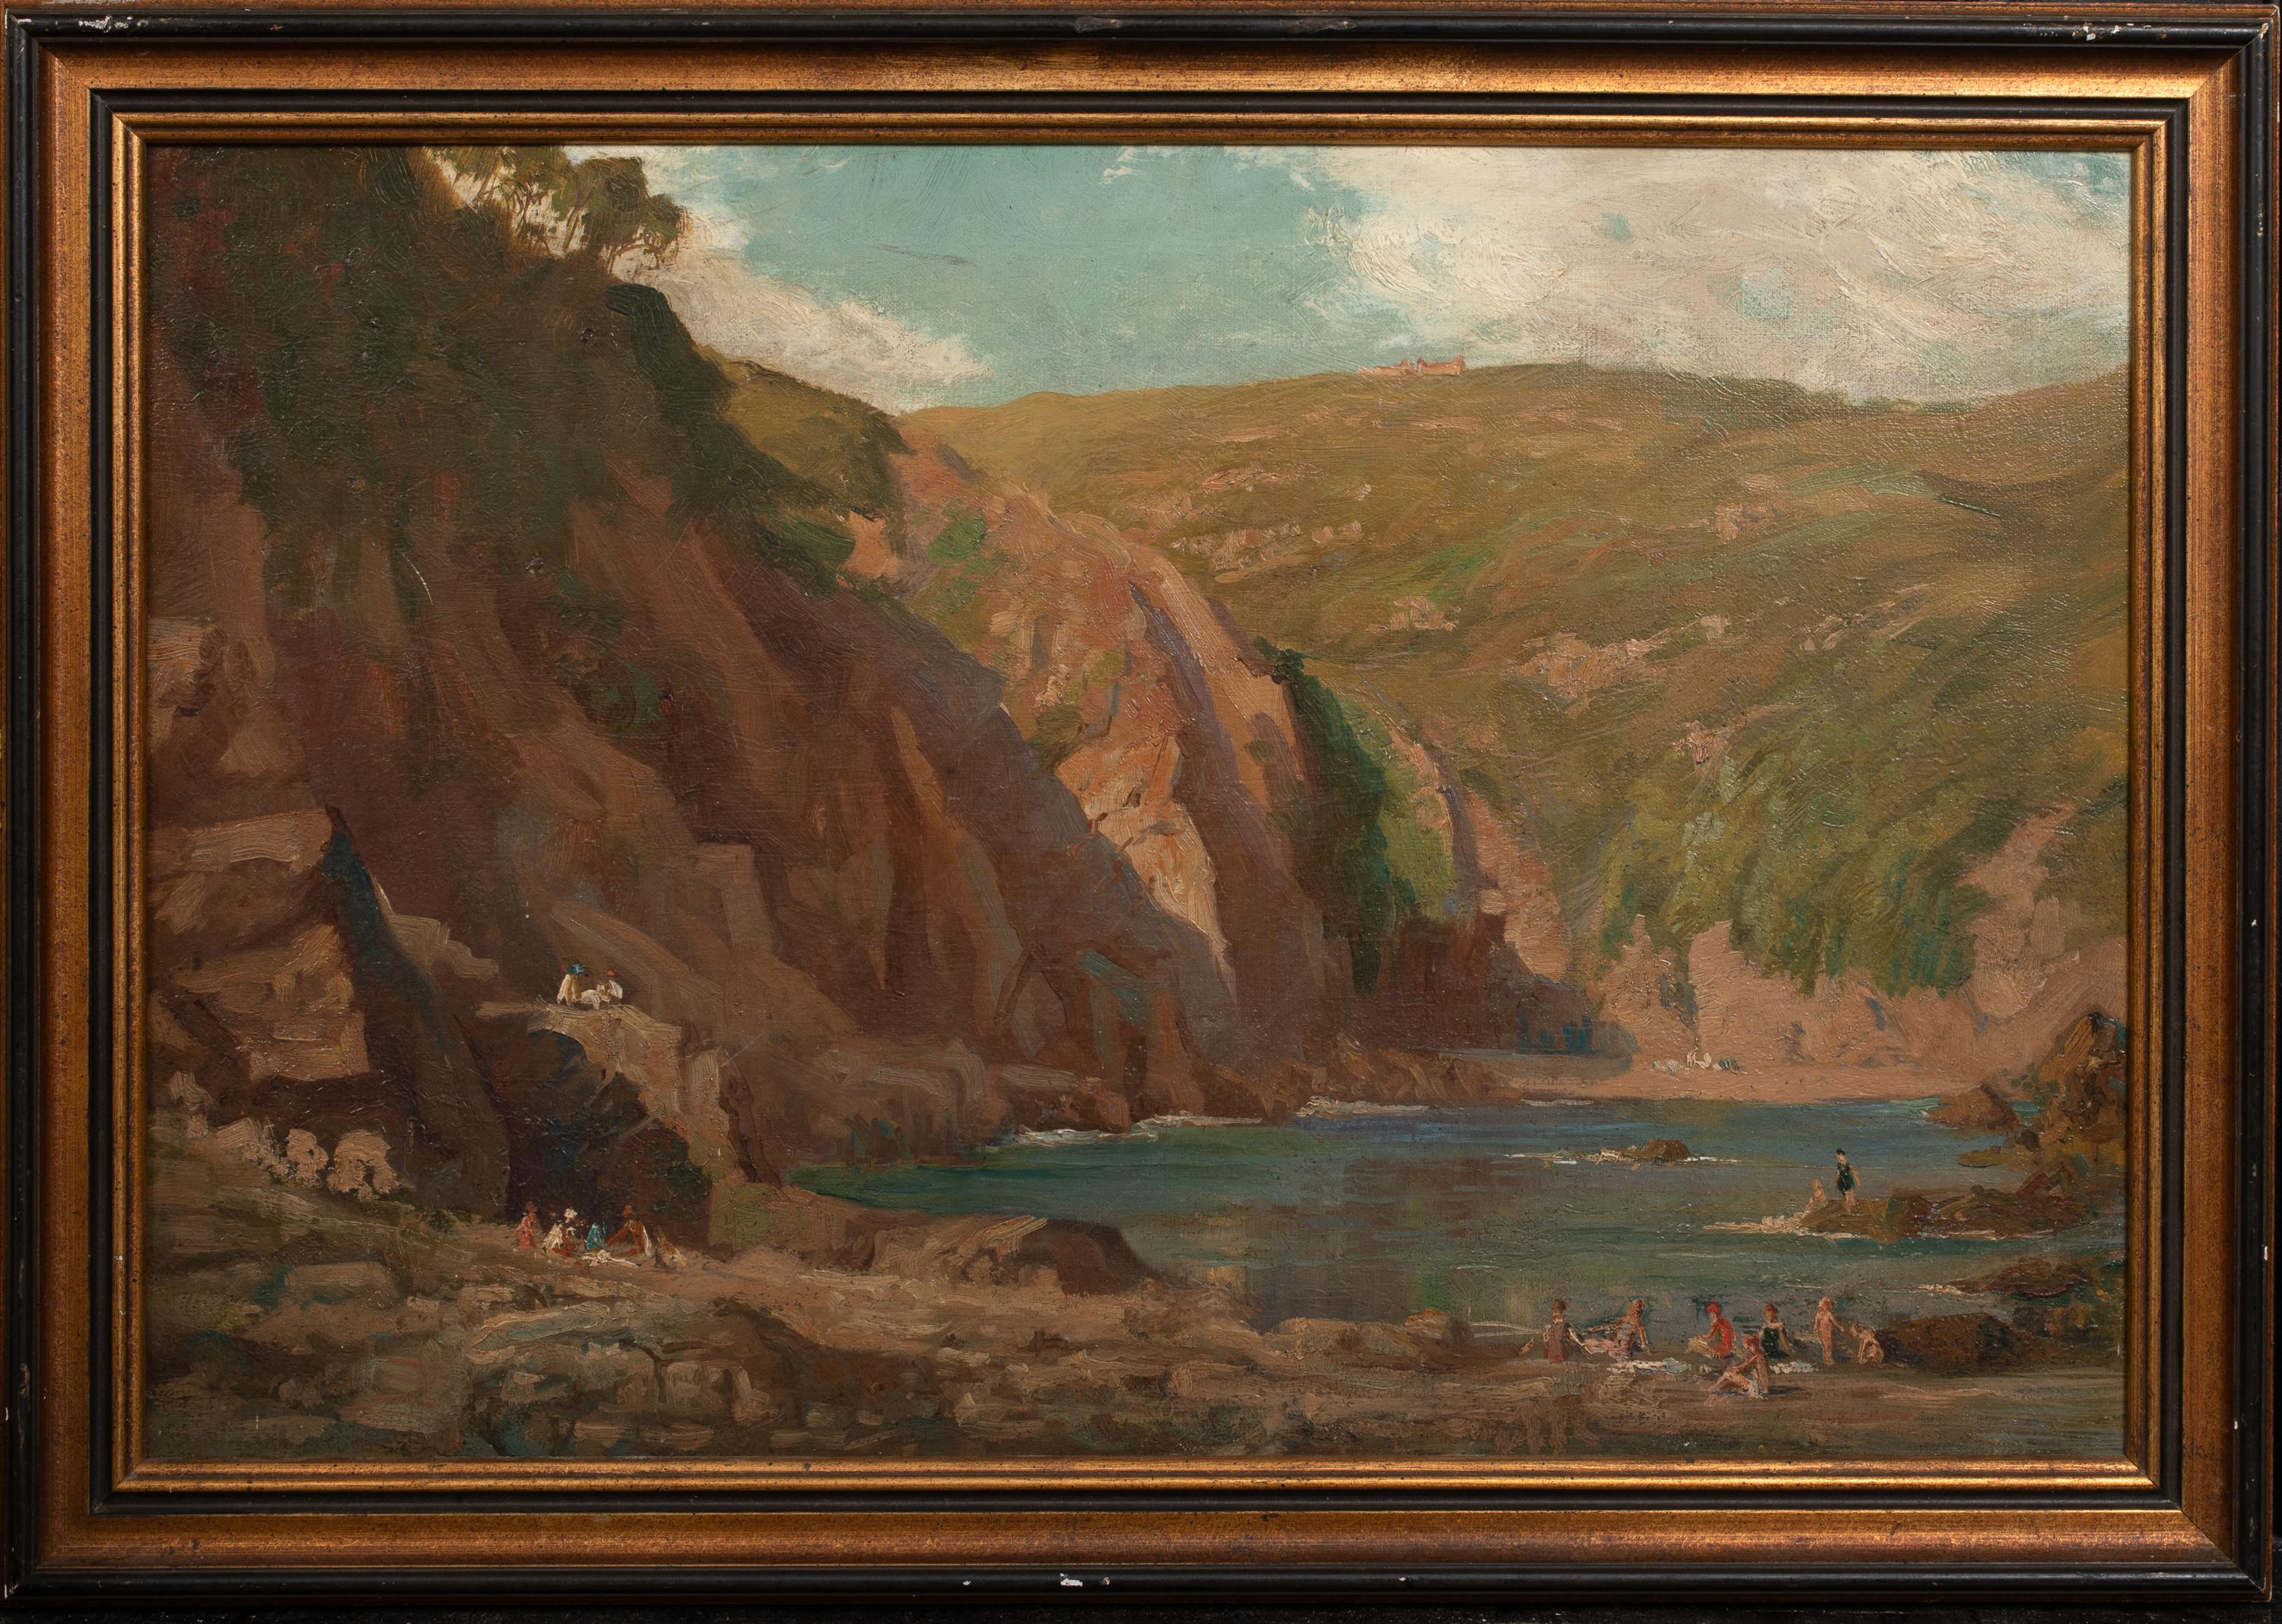 Samuel John Lamorna Birch Landscape Painting - Bathers At Lulworth Cove, Dorset, 19th Century  